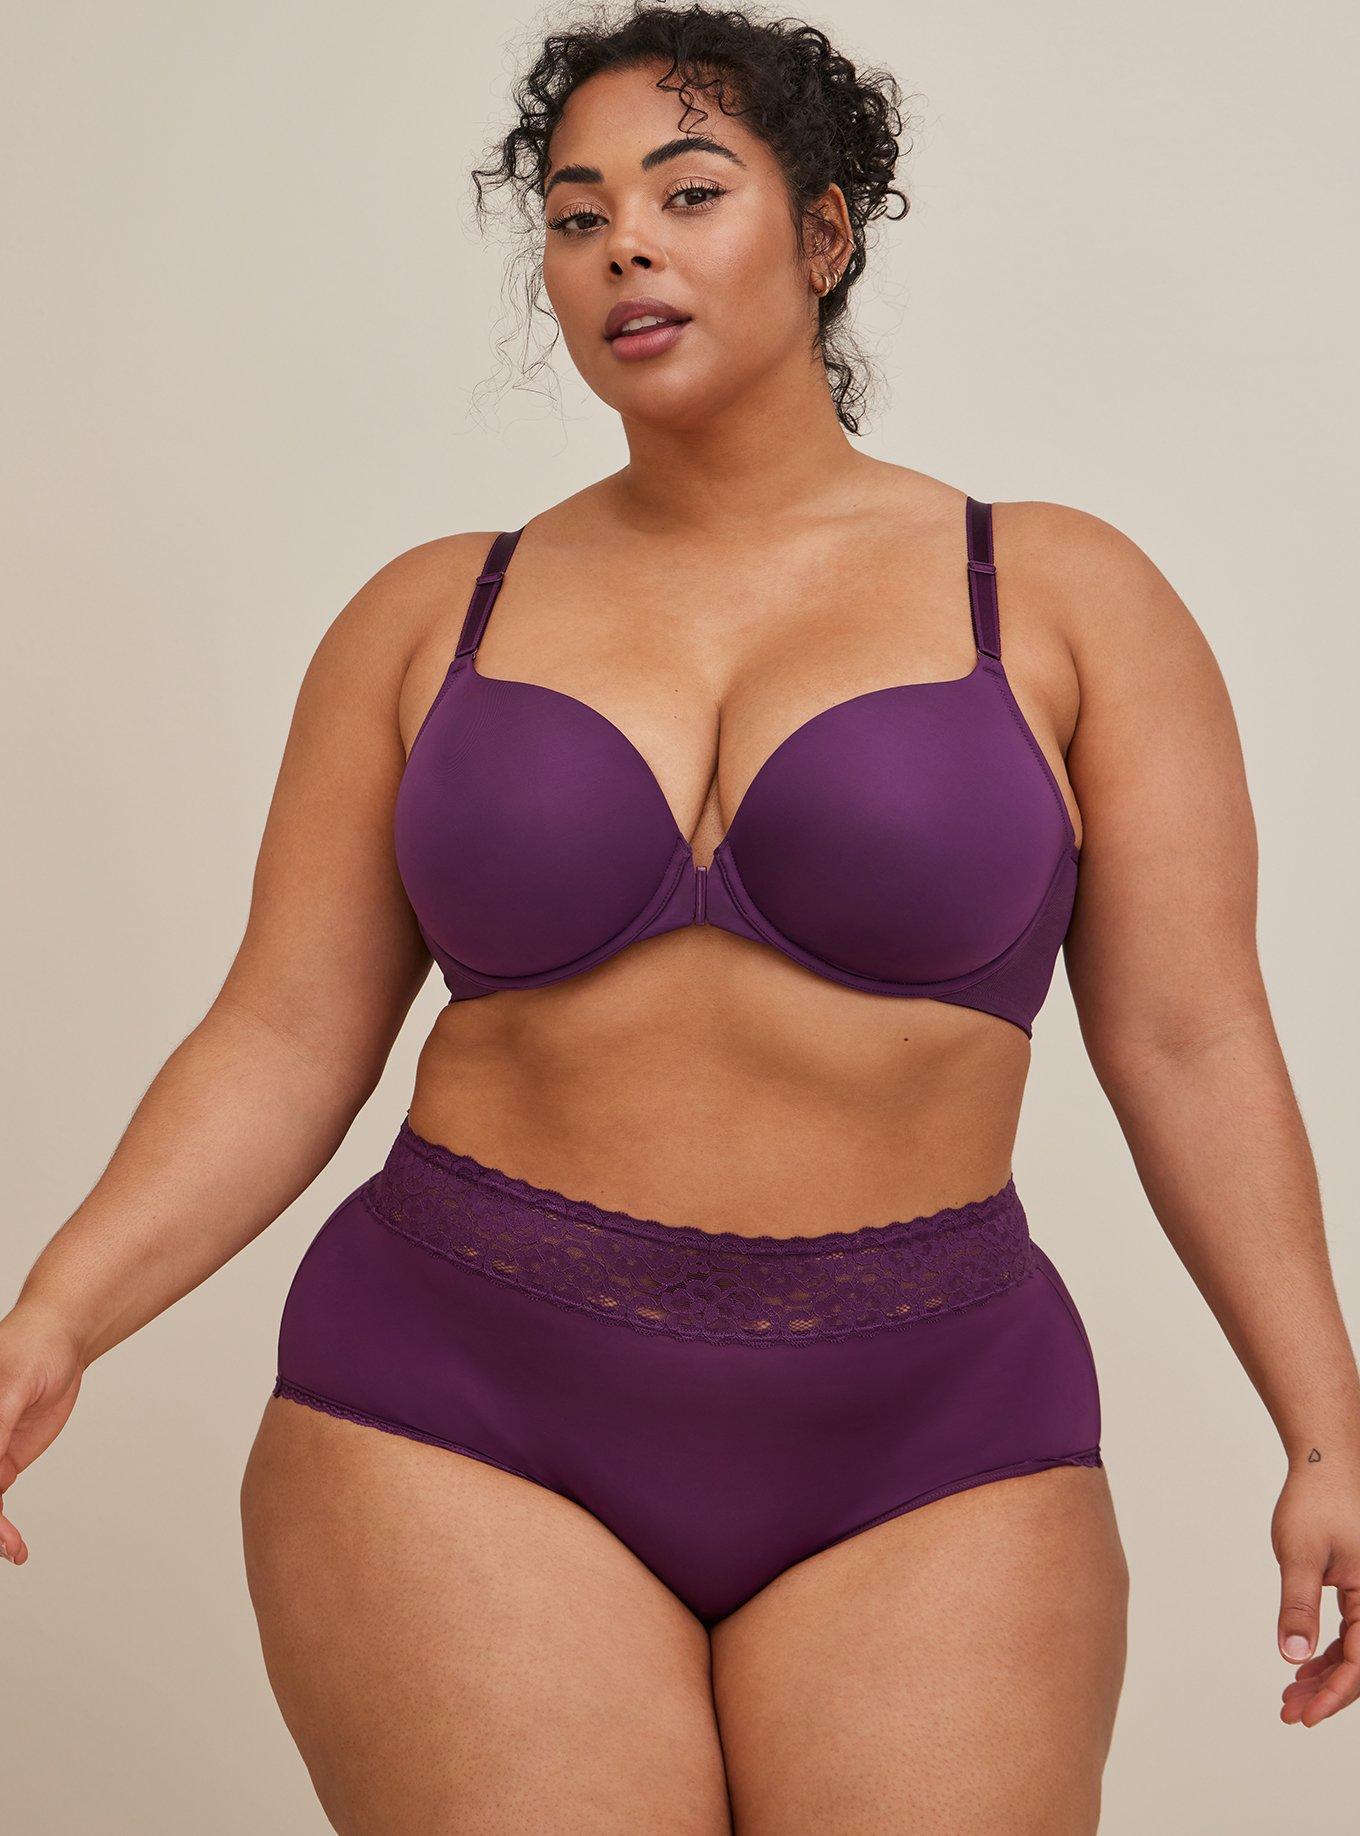 Plus Size - Wide Lace Trim Cheeky Panty - Second Skin Purple - Torrid